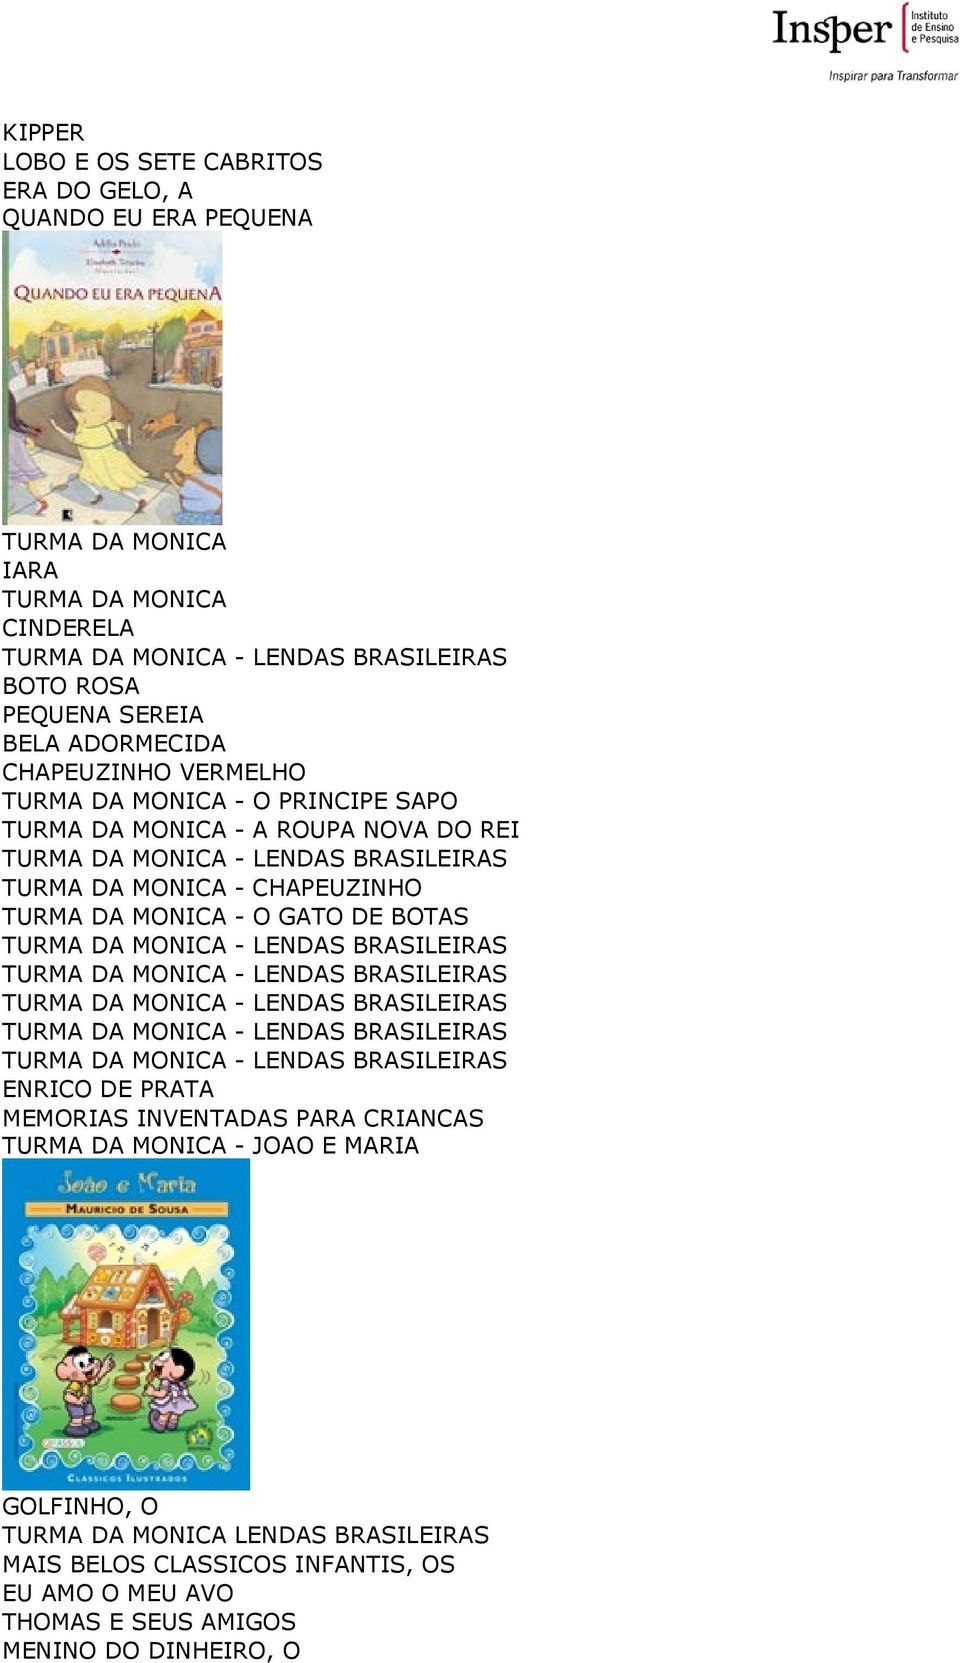 TURMA DA MONICA - LENDAS BRASILEIRAS TURMA DA MONICA - LENDAS BRASILEIRAS TURMA DA MONICA - LENDAS BRASILEIRAS TURMA DA MONICA - LENDAS BRASILEIRAS TURMA DA MONICA - LENDAS BRASILEIRAS ENRICO DE